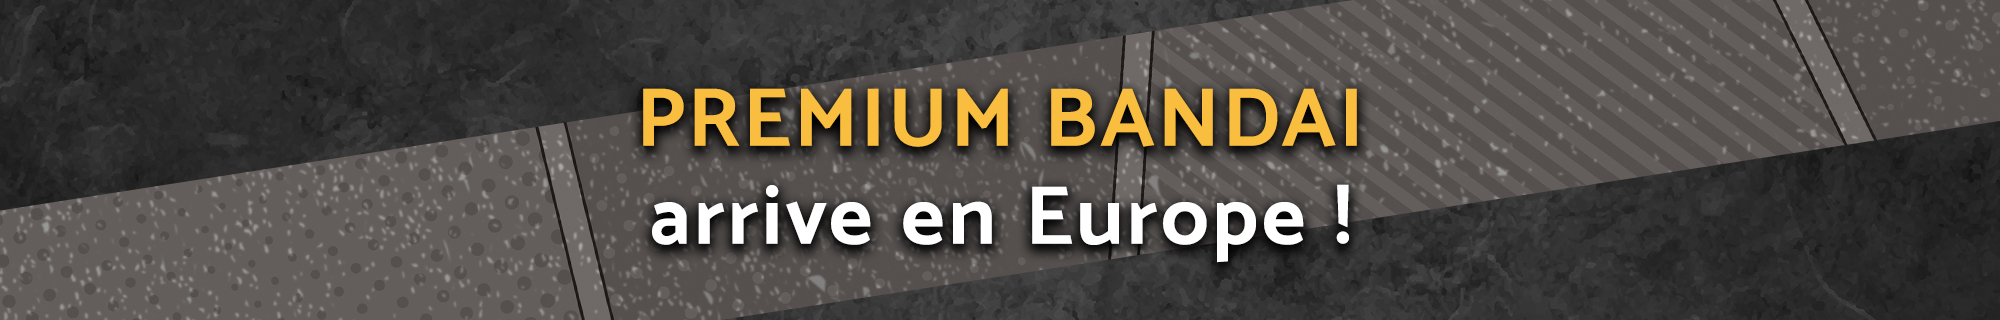 Premium Bandai arrive en Europe!